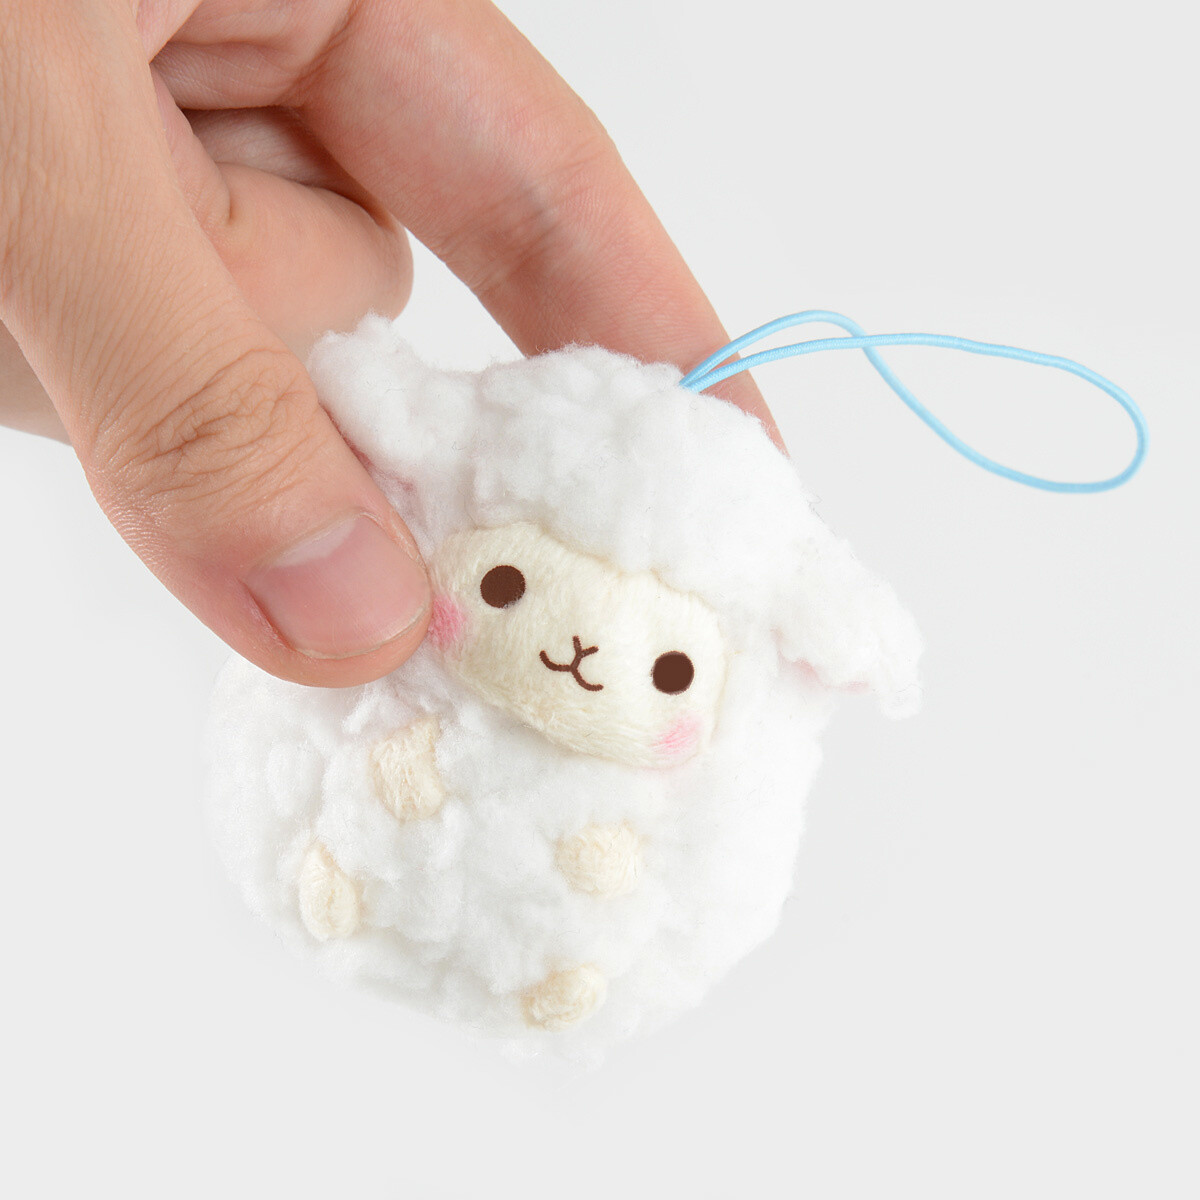 small sheep stuffed animal